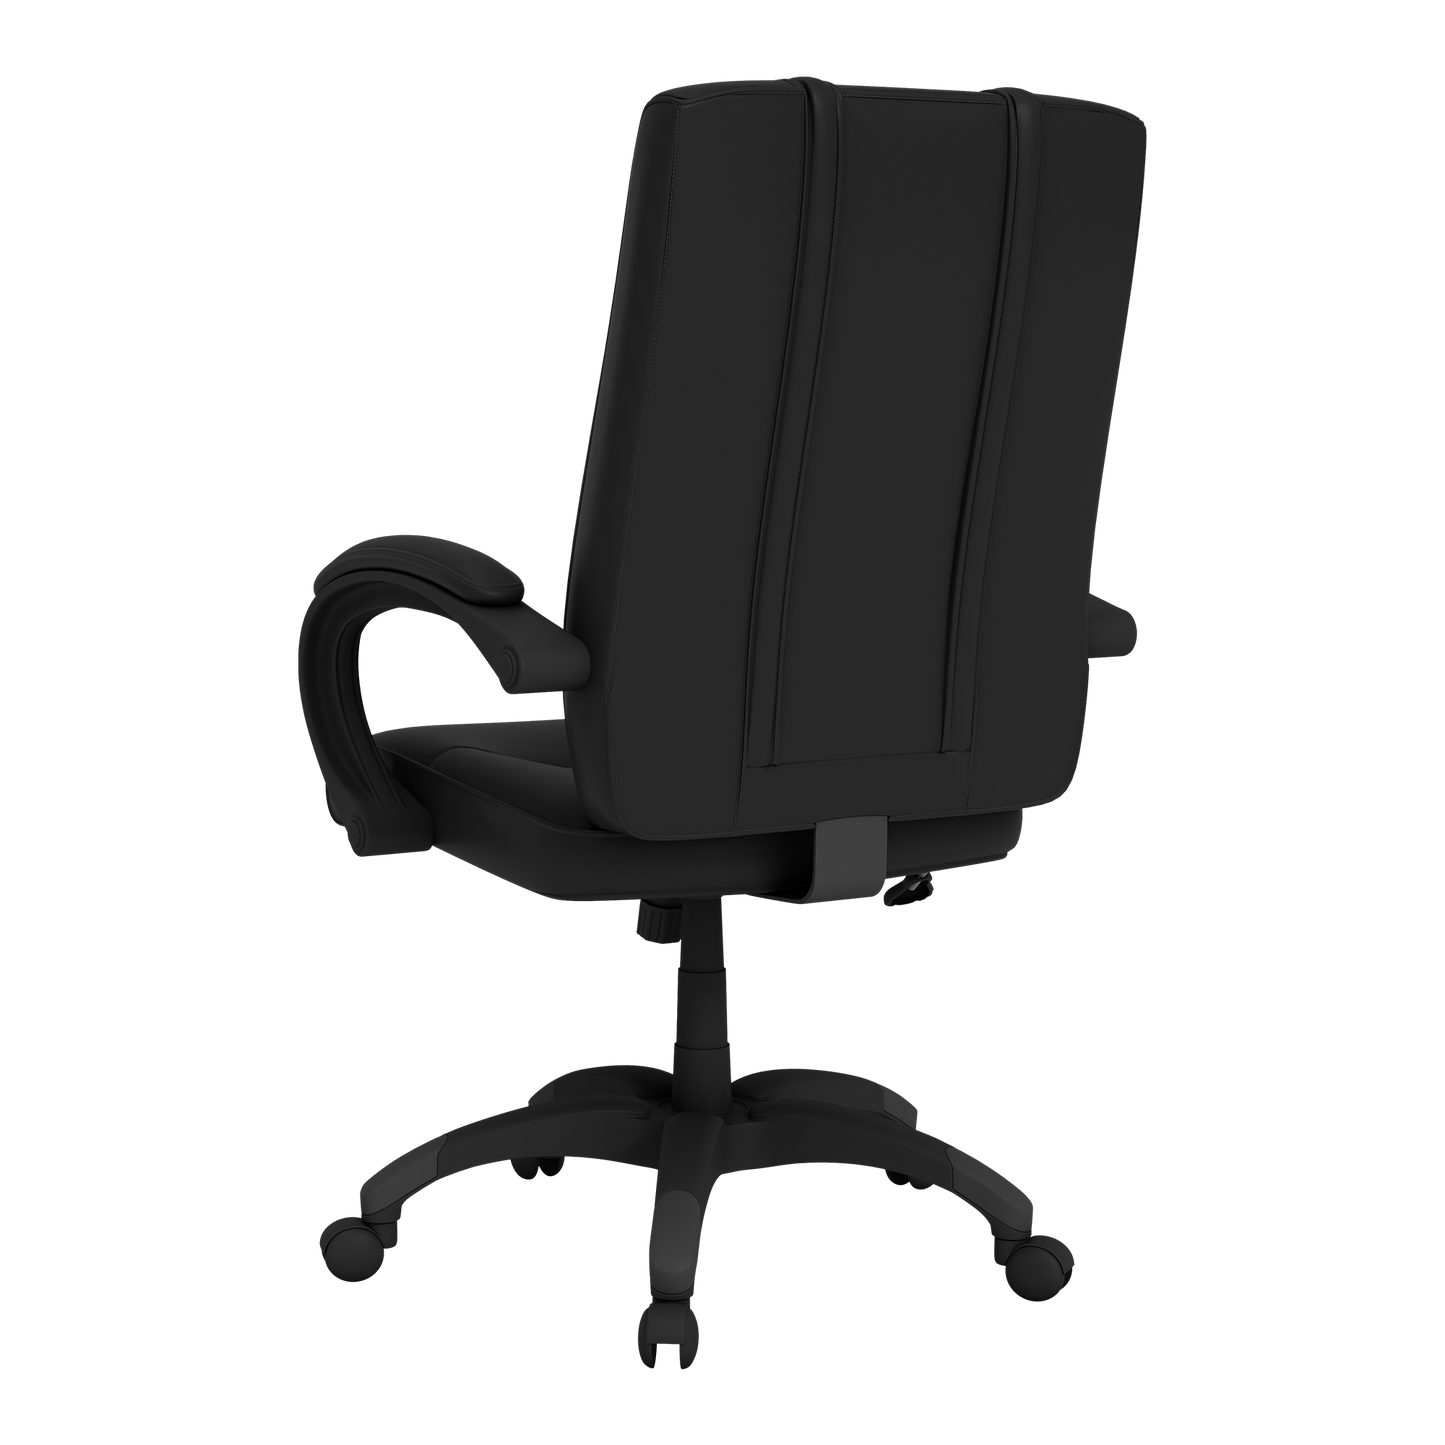 Office Chair 1000 with Villanova Wildcats Secondary Logo